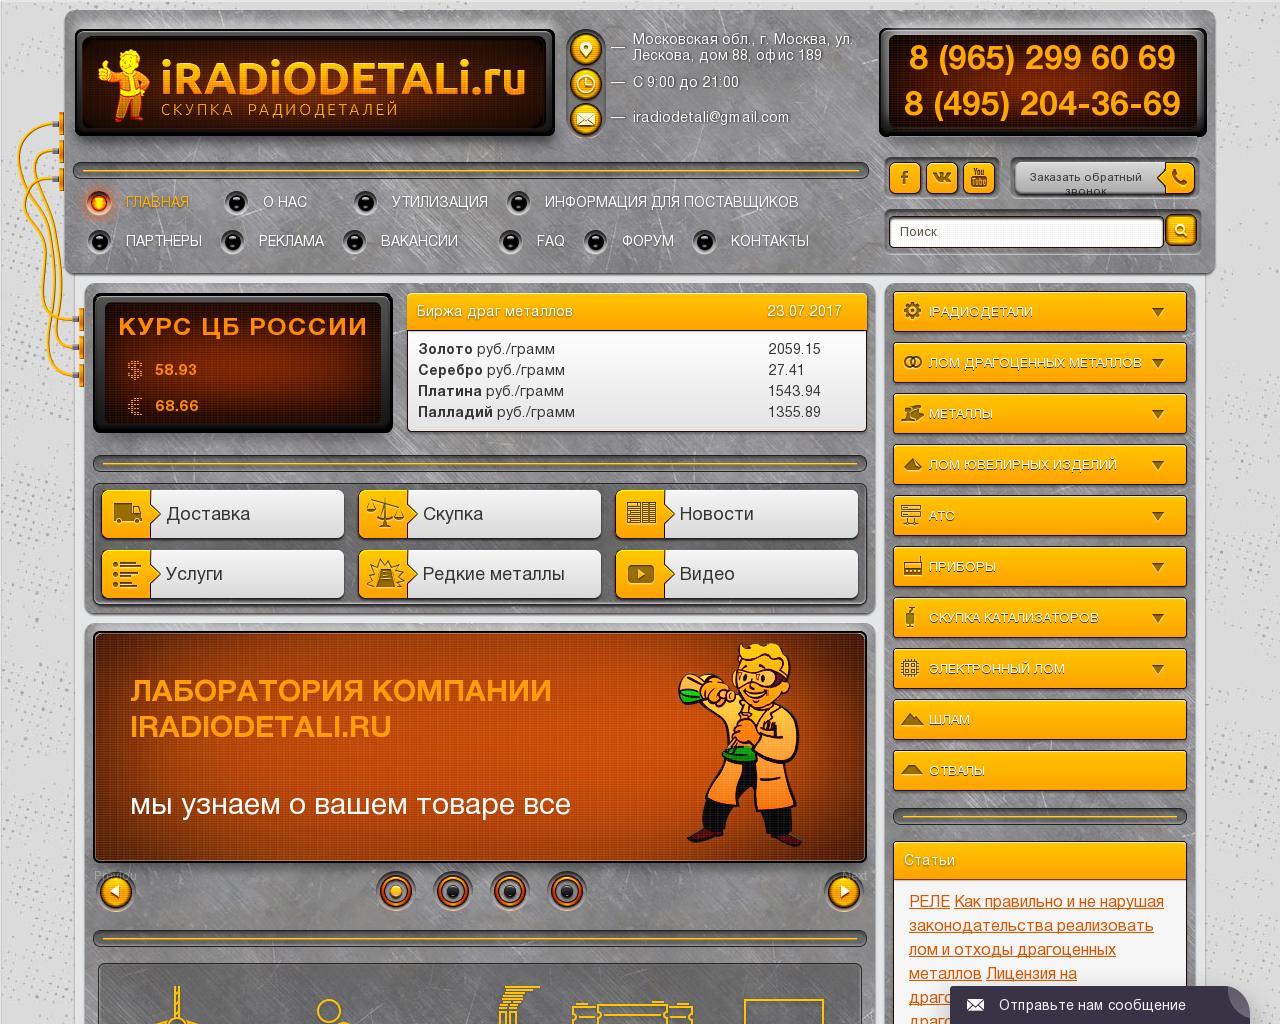 Изображение сайта iradiodetali.ru в разрешении 1280x1024